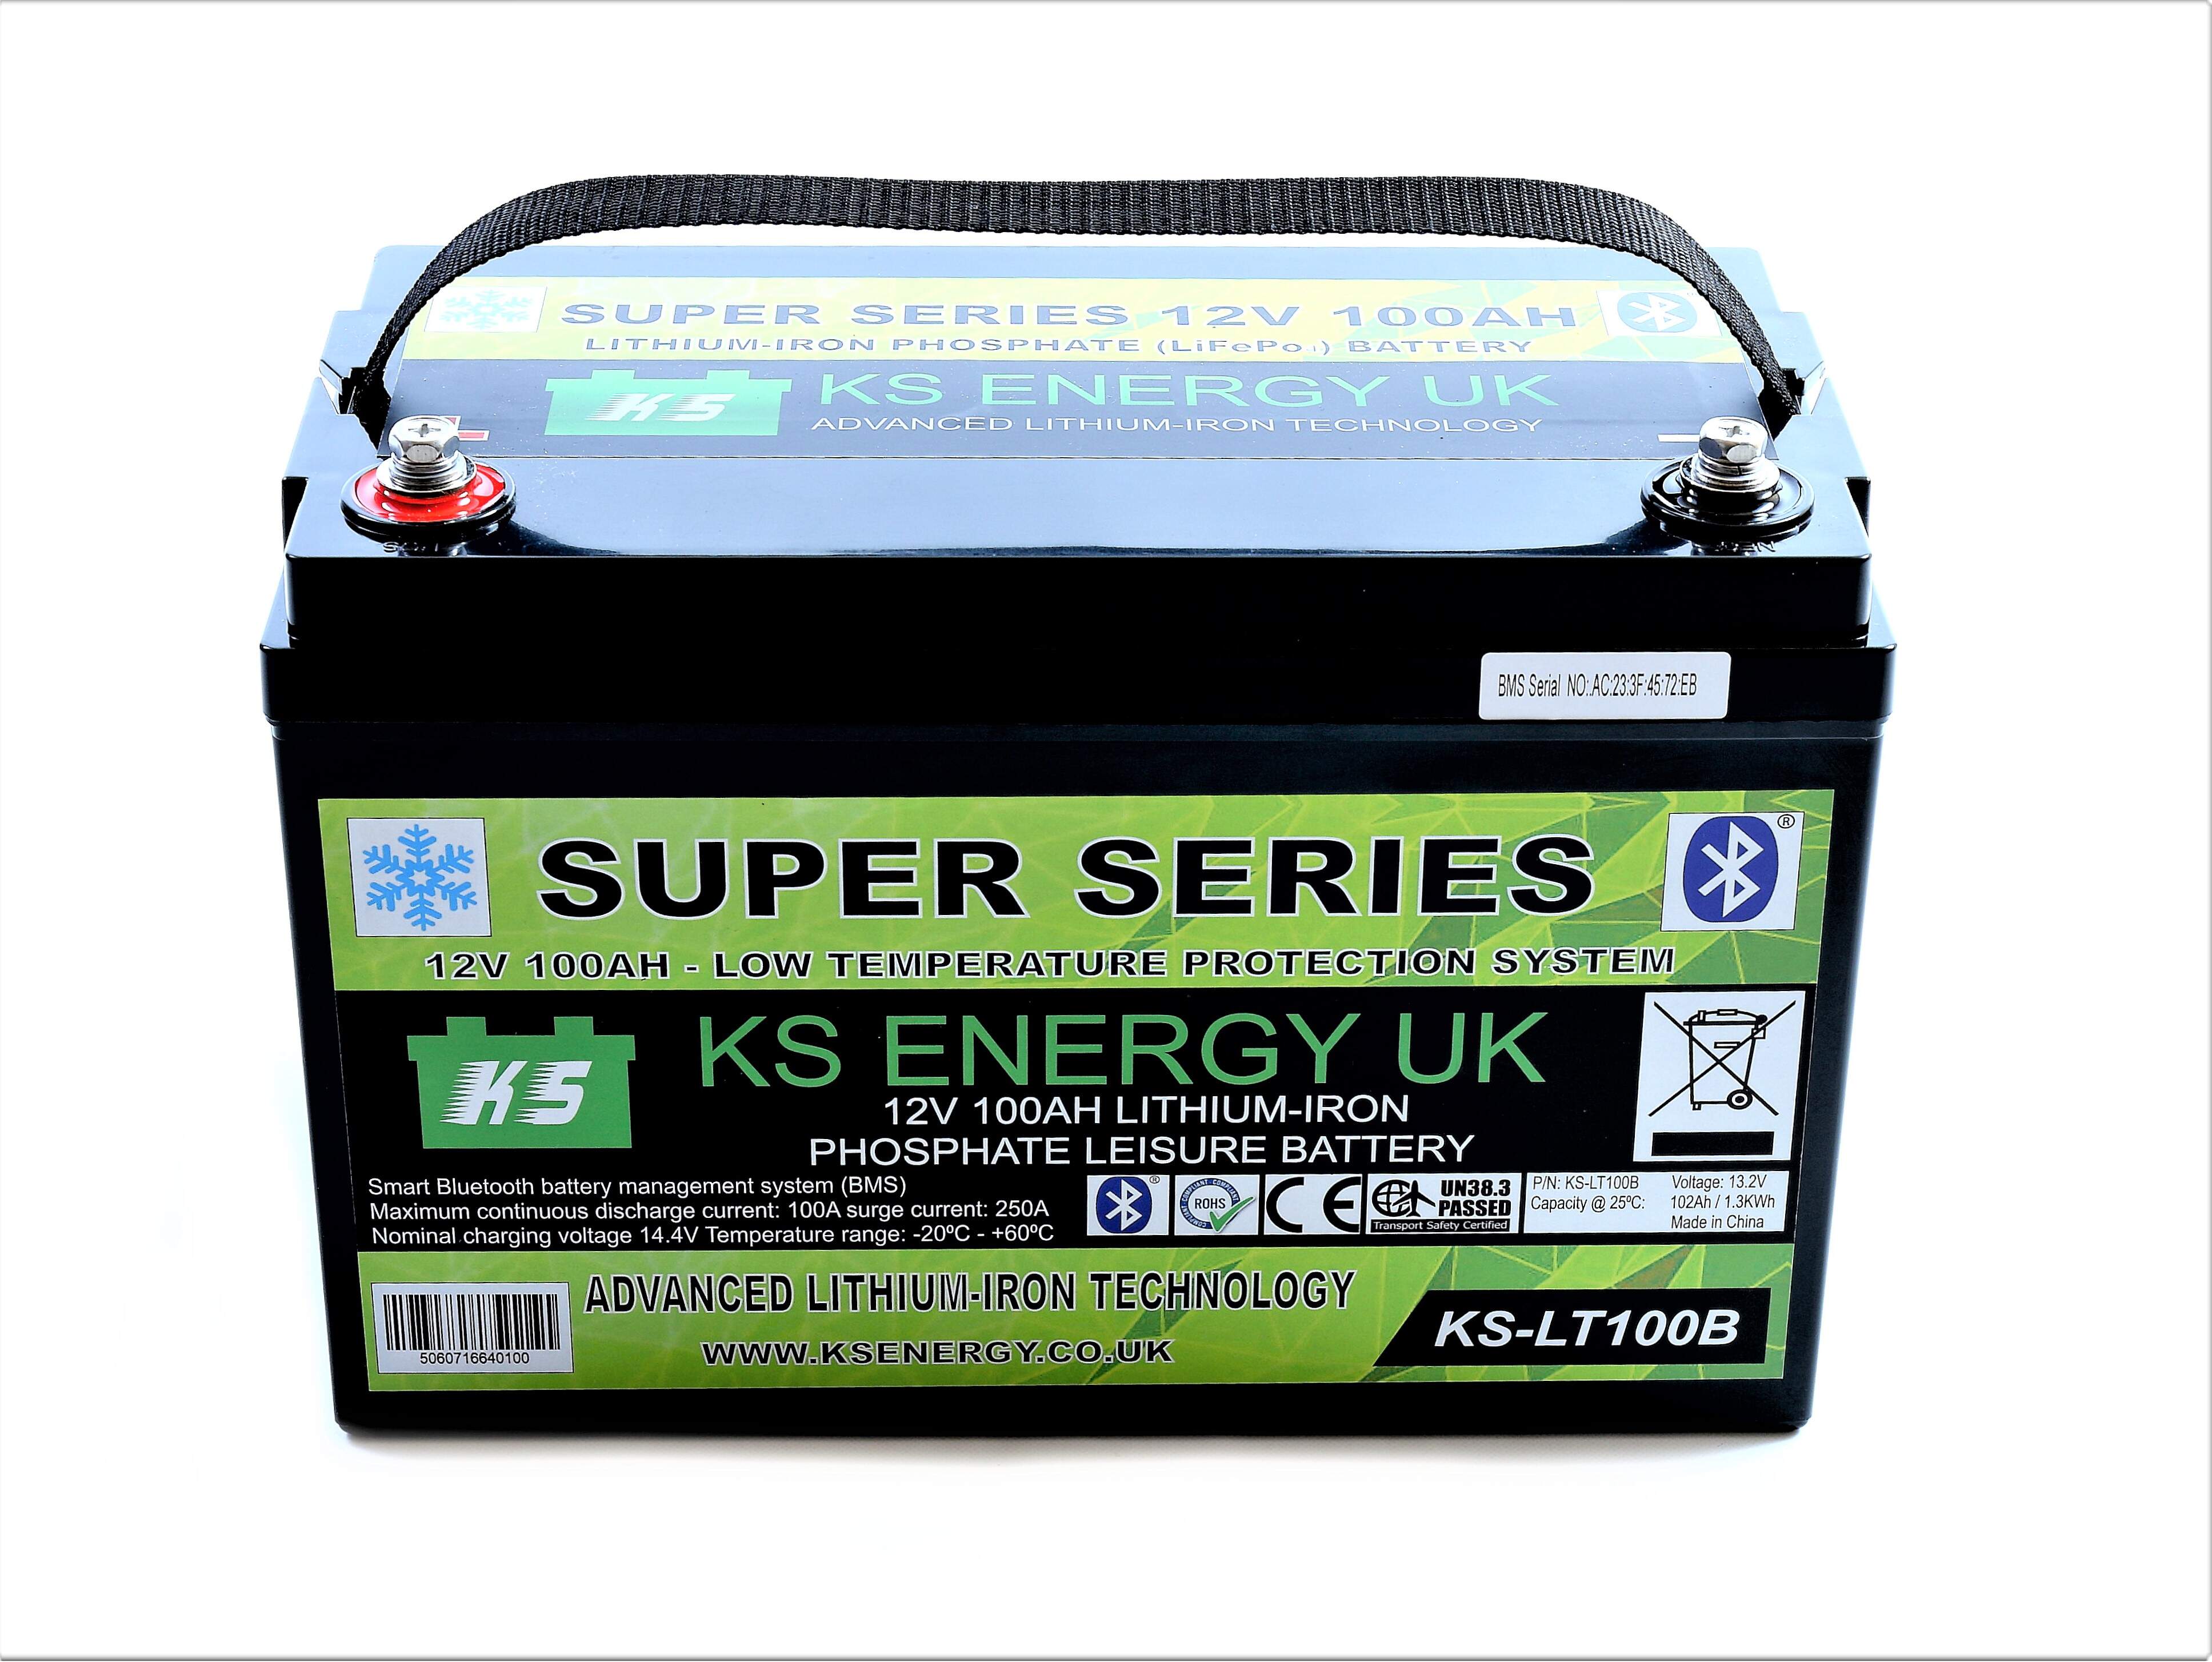 2): KS-LT100B 12v 100AH Super Series Bluetooth lithium leisure battery